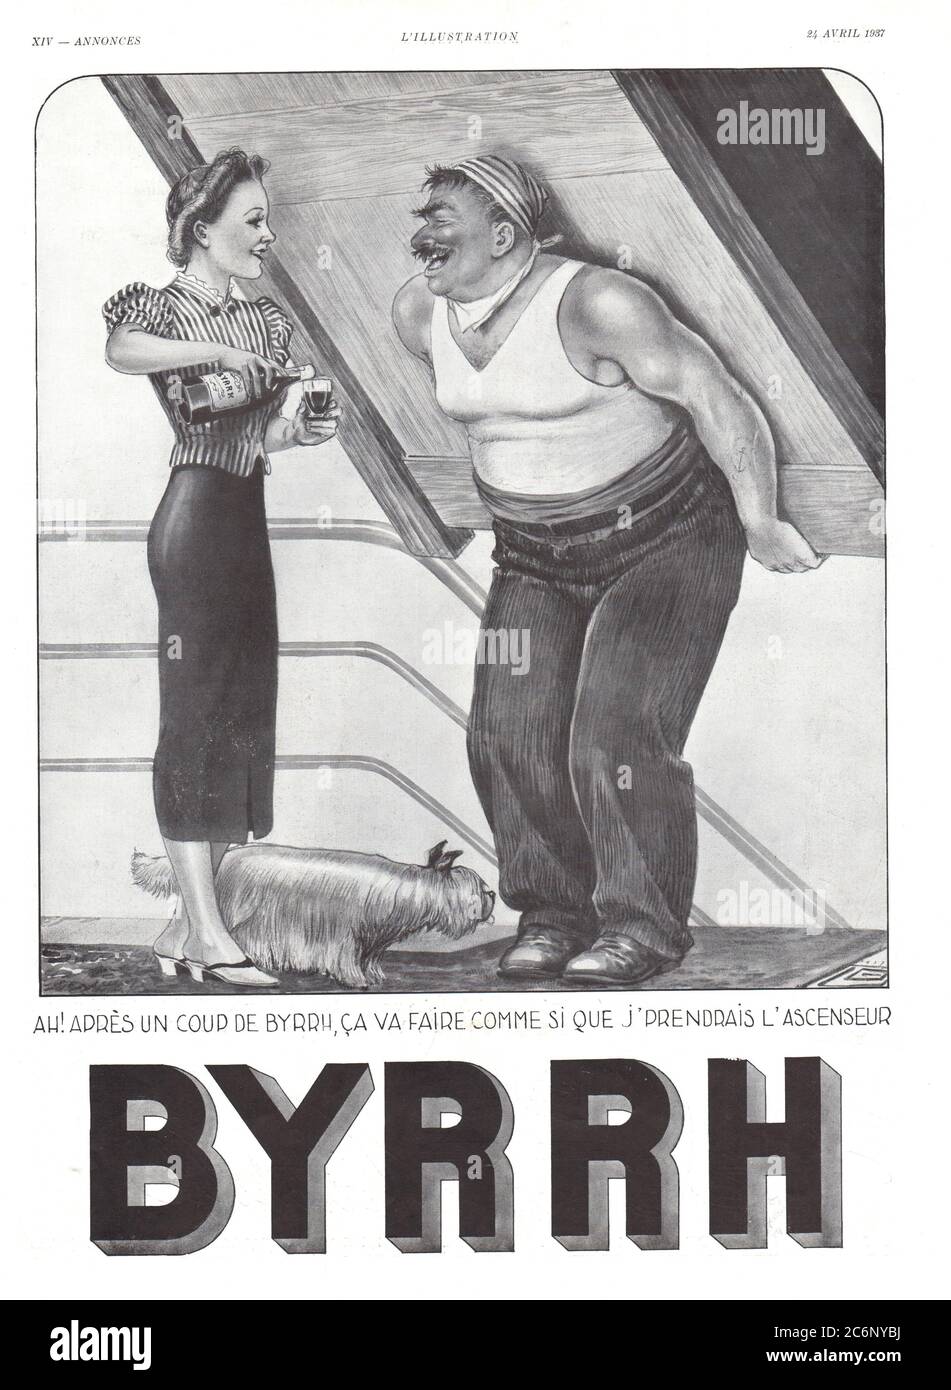 Publicite aperitif Byrrh 1937 Stock Photo